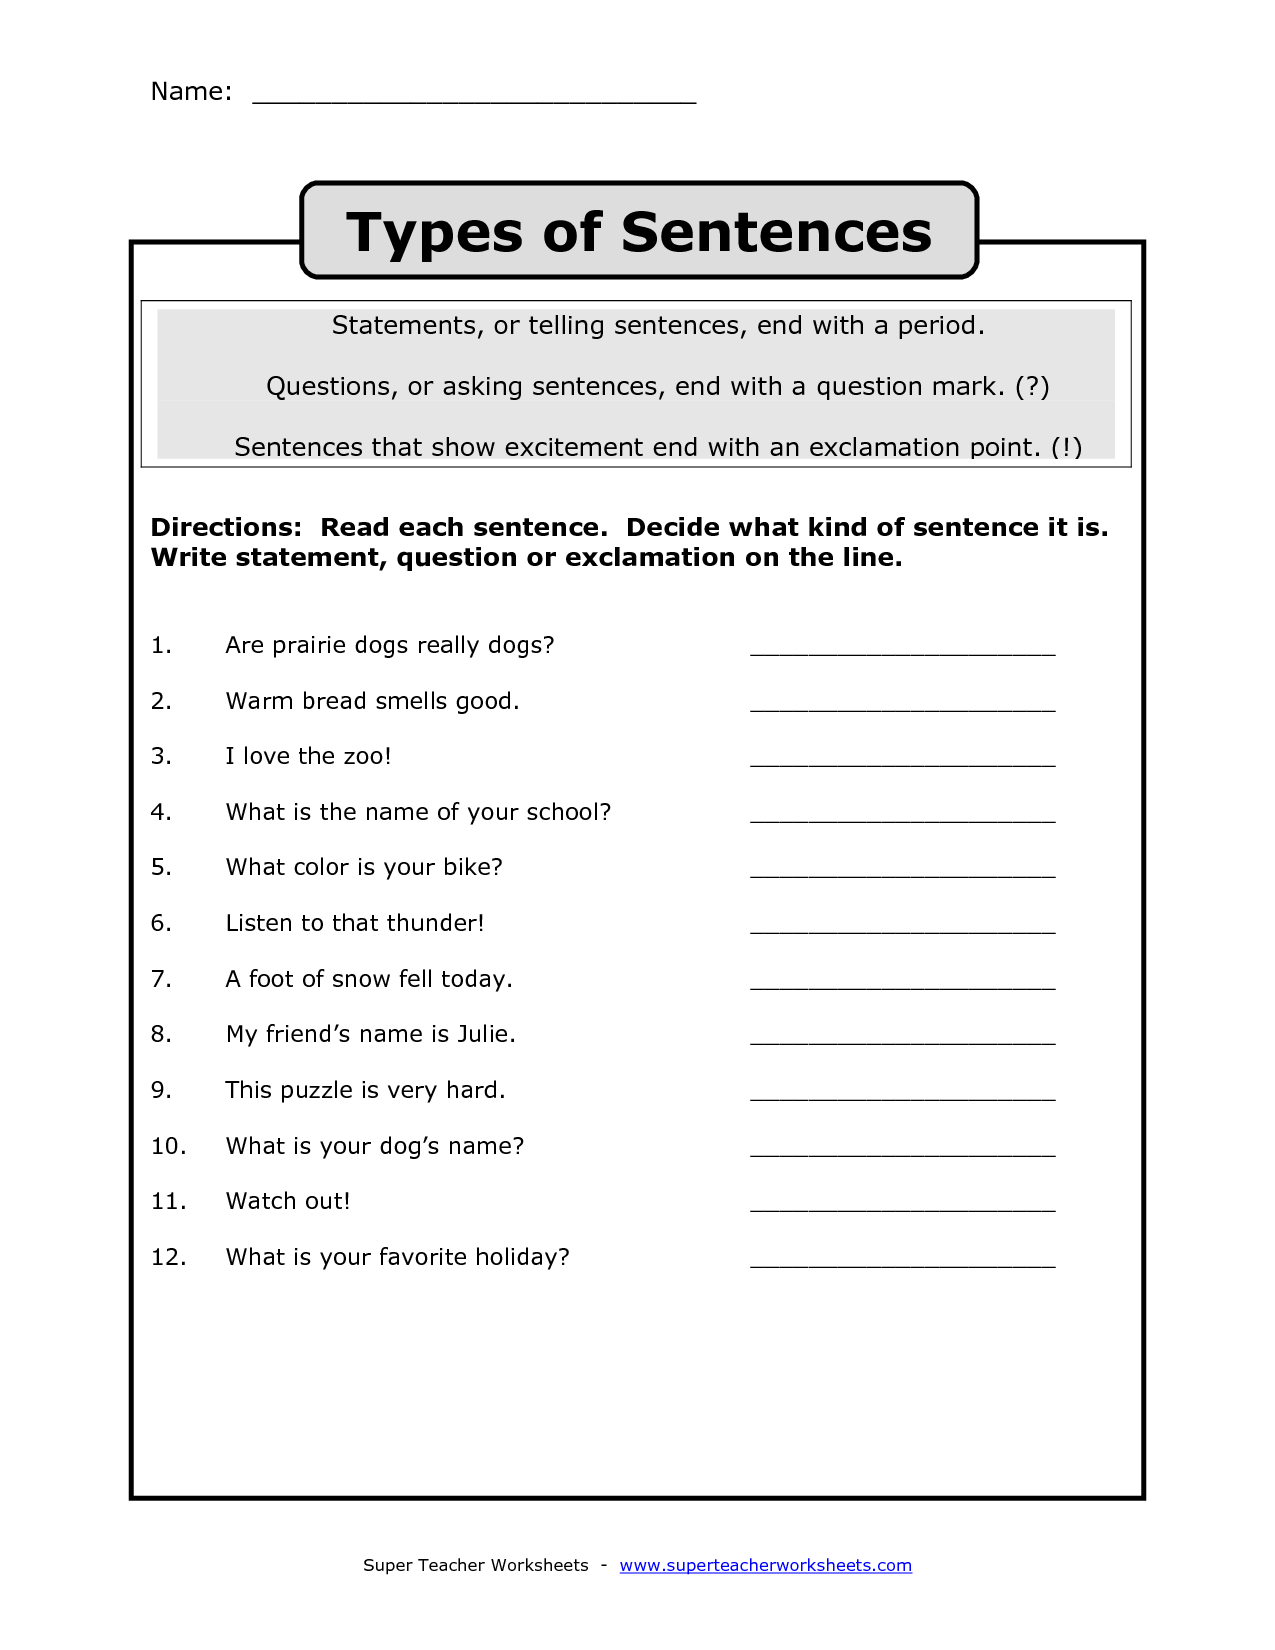 different-types-of-sentences-types-of-sentences-worksheet-kinds-of-sentences-complex